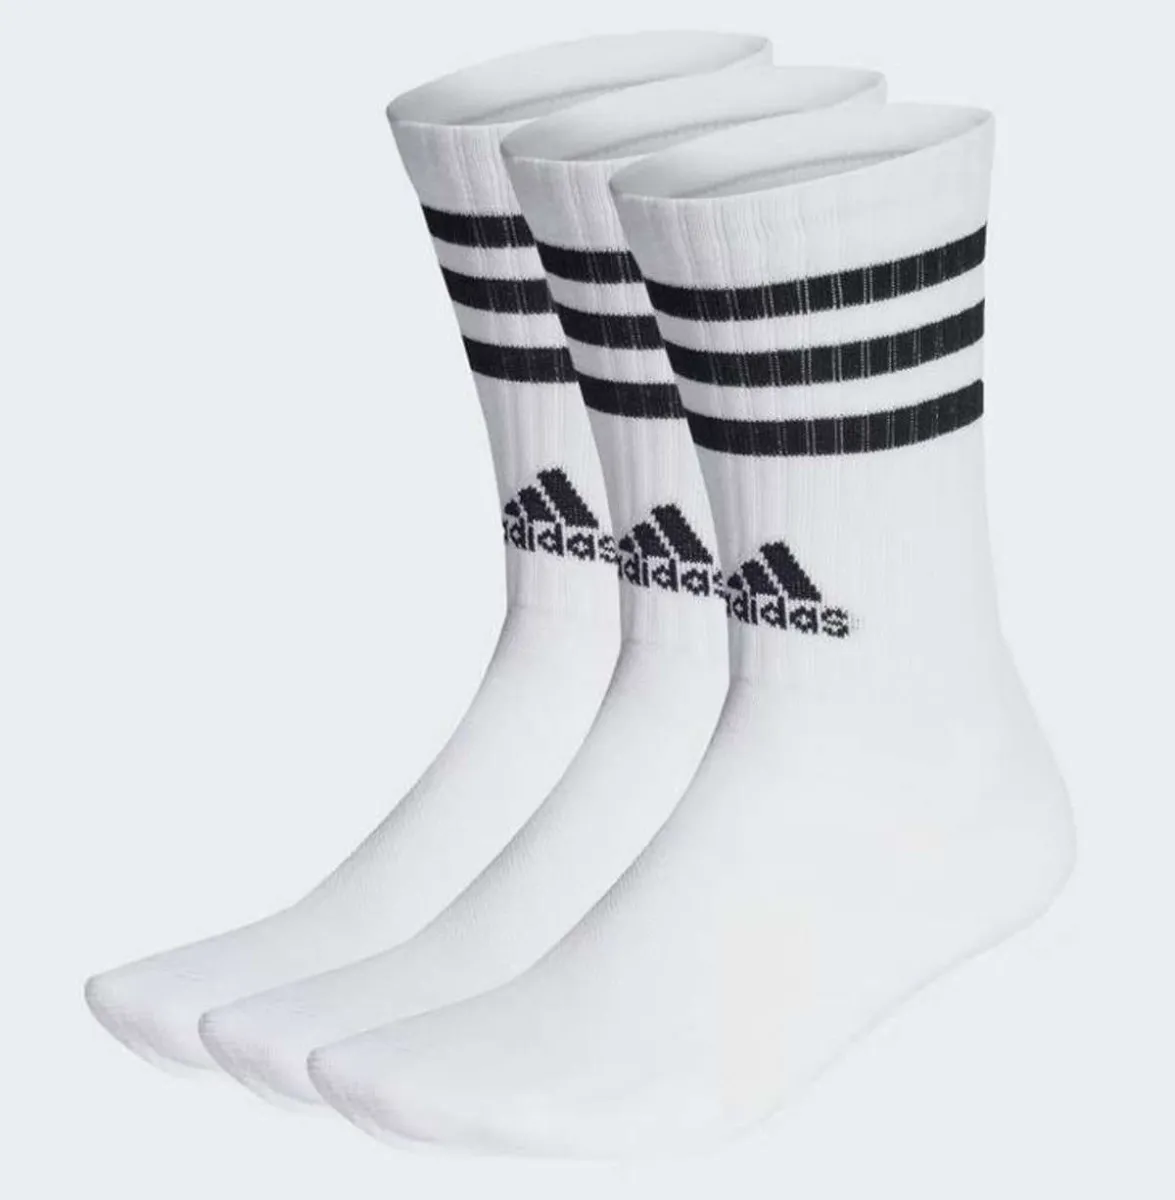 calcetines adidas high leg 3 stripes blanco